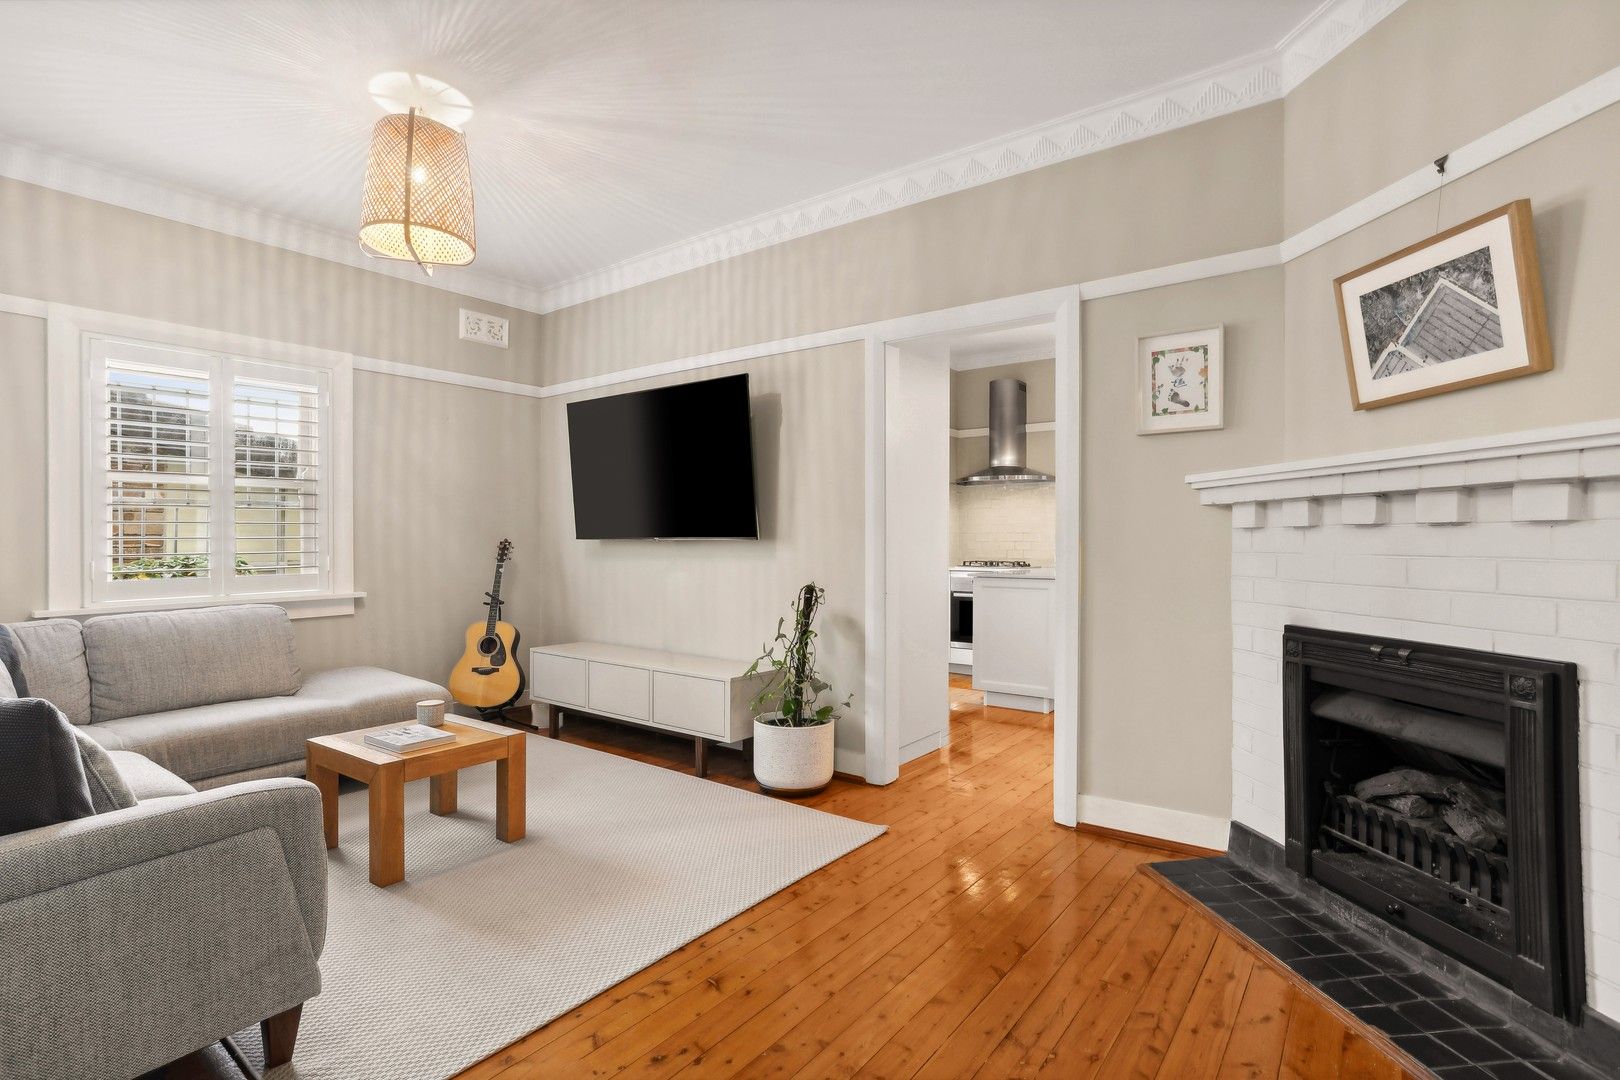 3 bedrooms Apartment / Unit / Flat in 2/4 Gardiner Street BONDI JUNCTION NSW, 2022